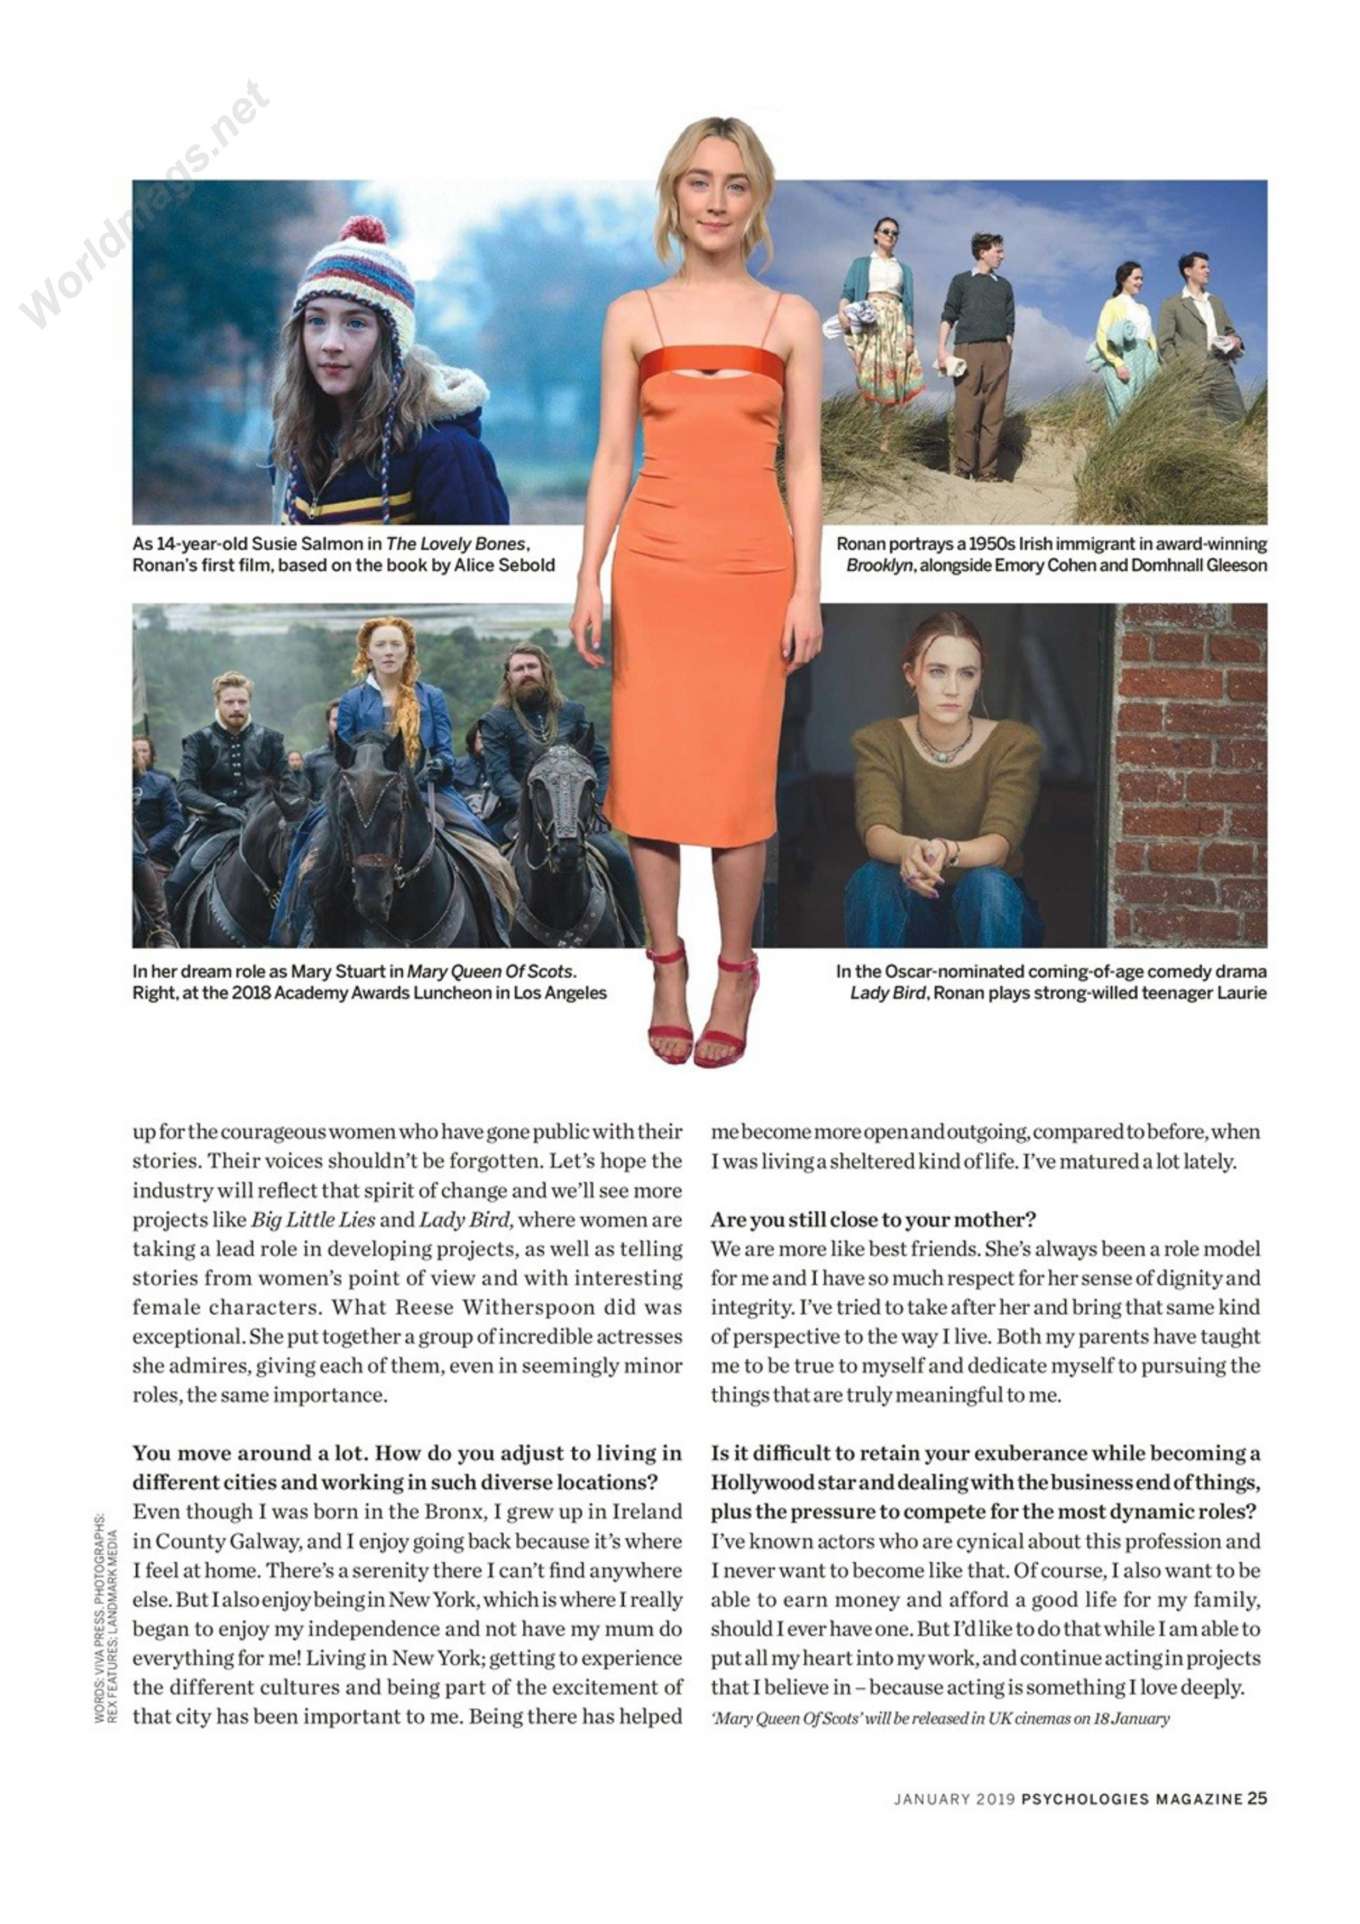 Saoirse Ronan â€“ Psychologies Magazine (UK January 2019 issue)